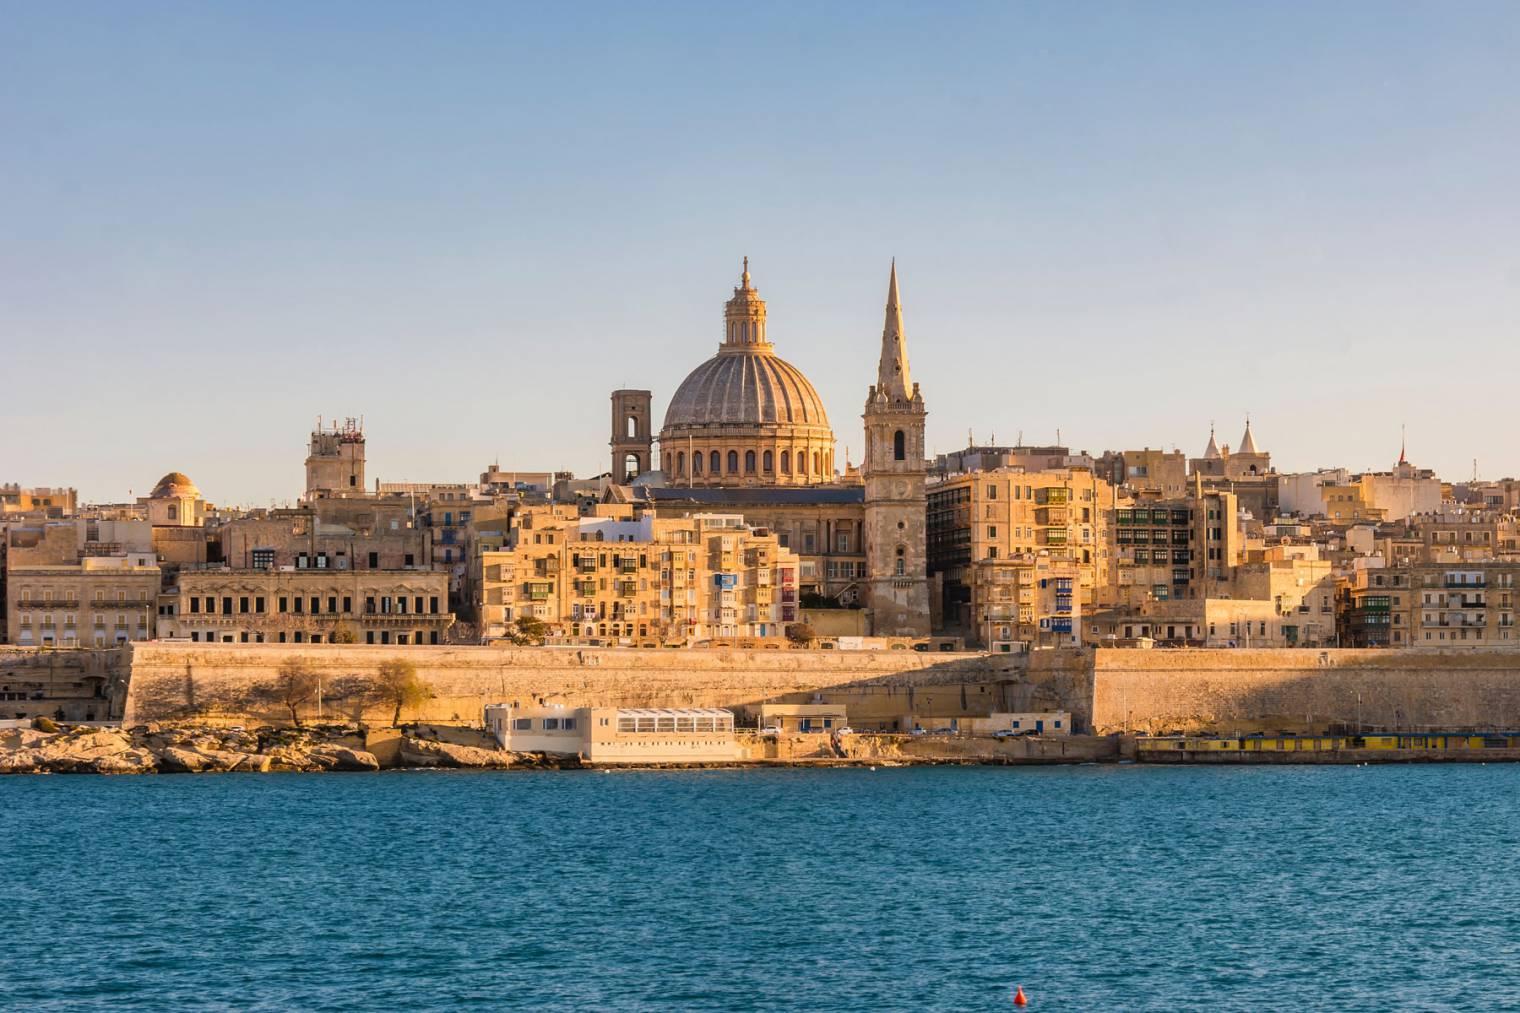 WETM-IAC Malta 2020 to be postponed